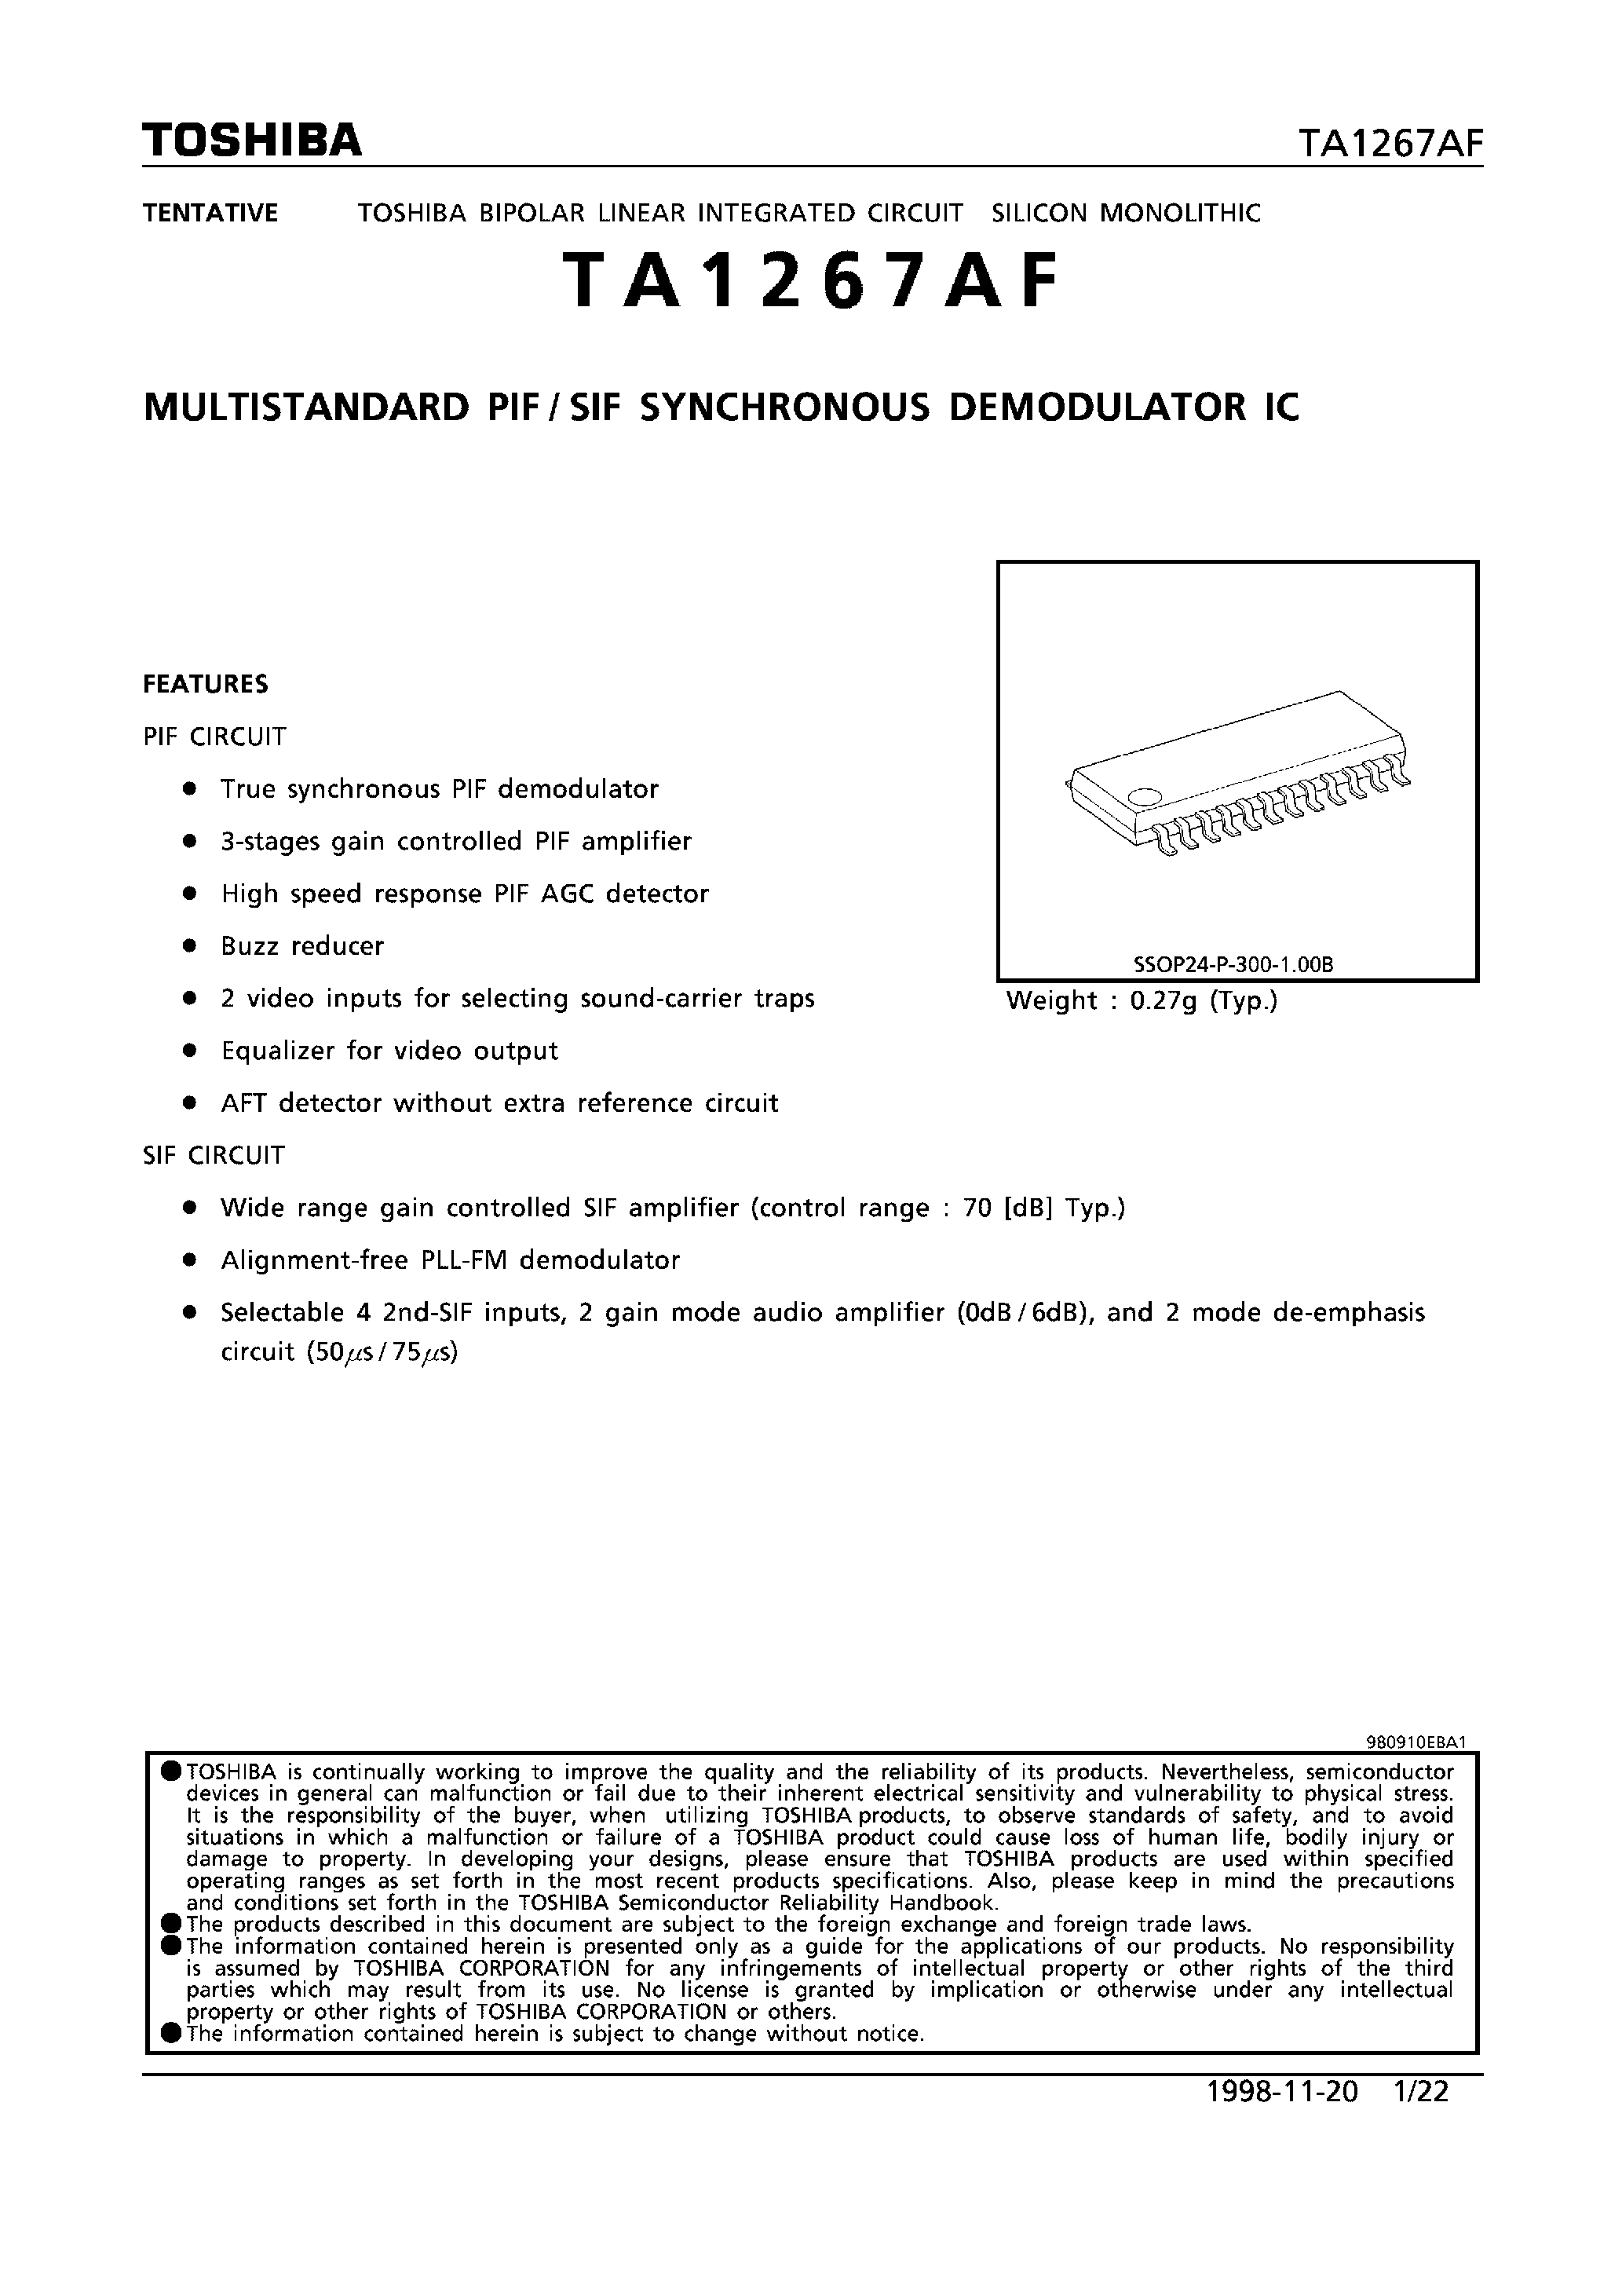 Datasheet TA1267AF - MULTISTANDARD PIF/SIF SYNCHRONOUS DEMODULATOR IC page 1